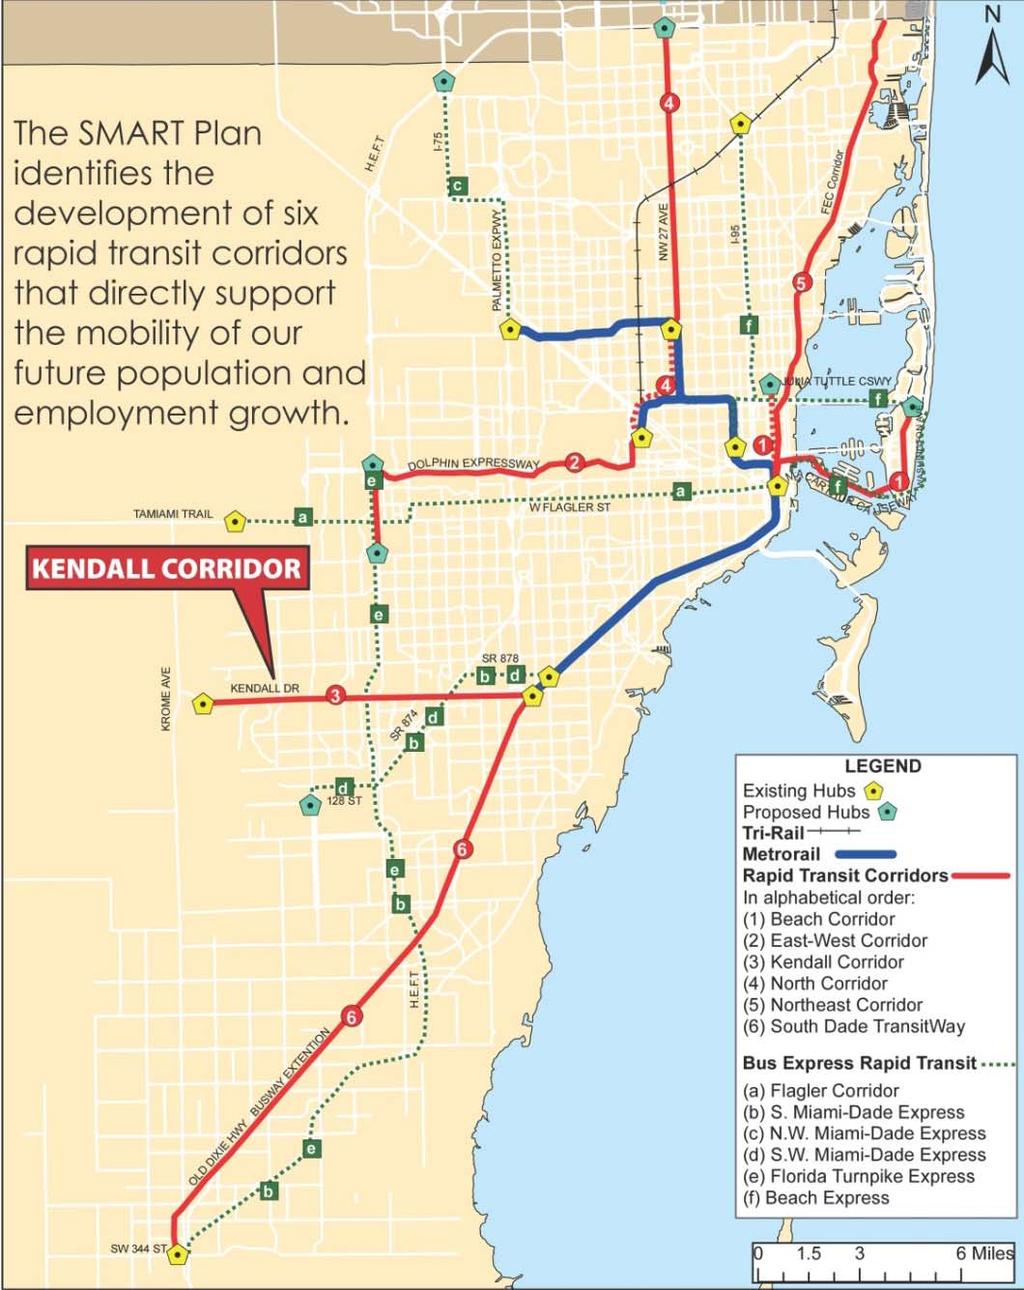 Miami-Dade MPO SMART Plan Six identified Rapid Transit Corridors: Beach Corridor